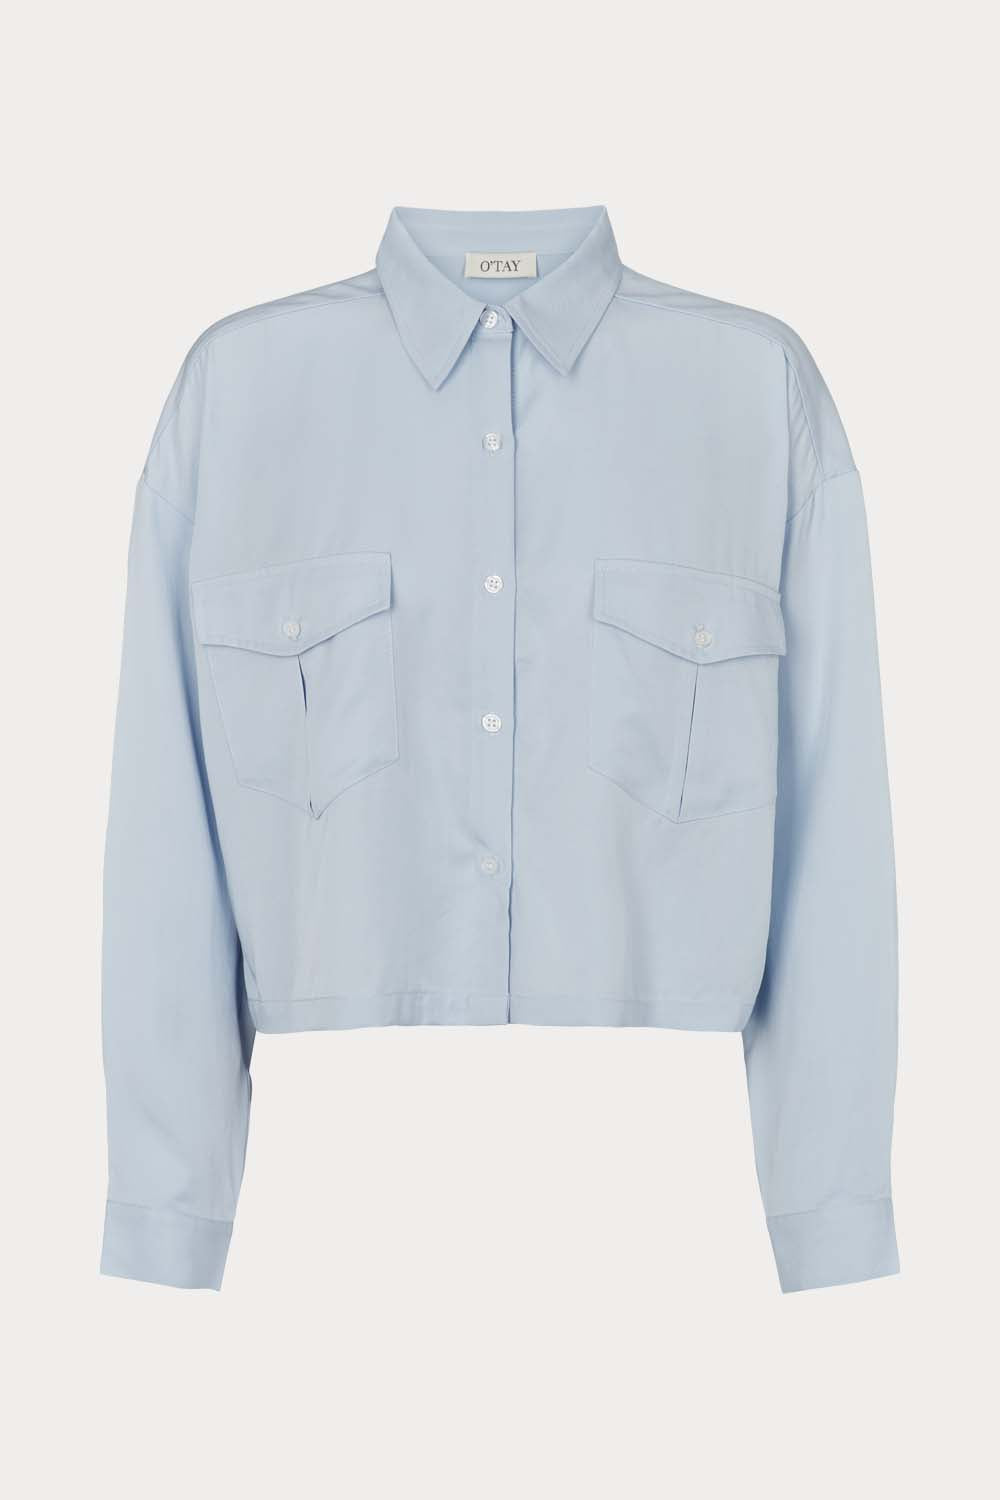 O&#39;TAY Cerise Shirt Skjorter Light Blue